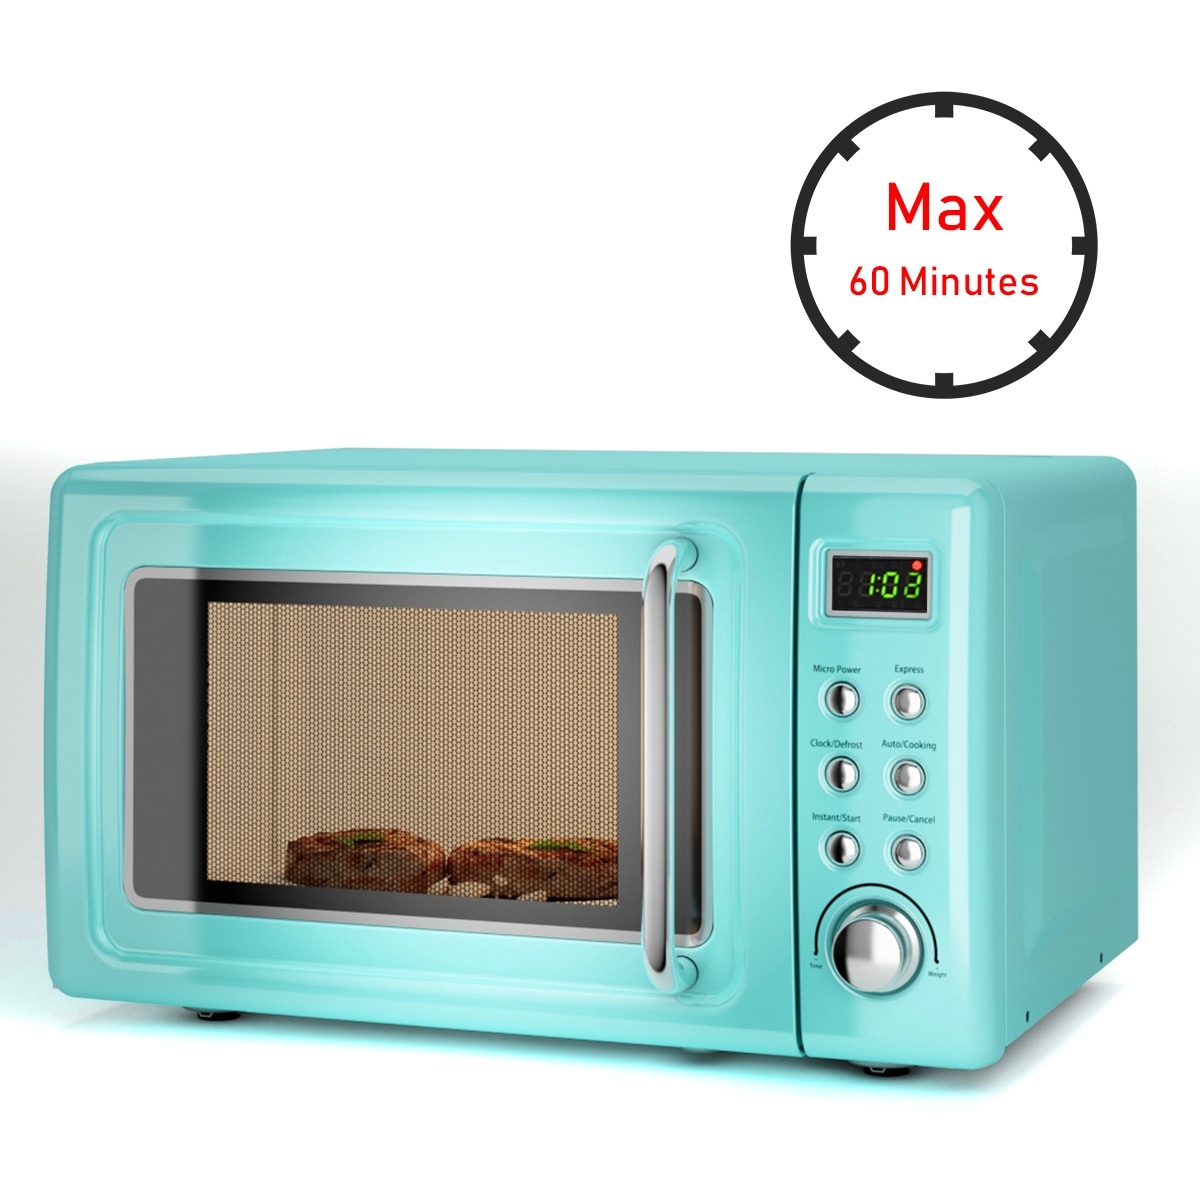 Costway 0.9 Cu.ft Retro Countertop Compact Microwave Oven - Mint Green